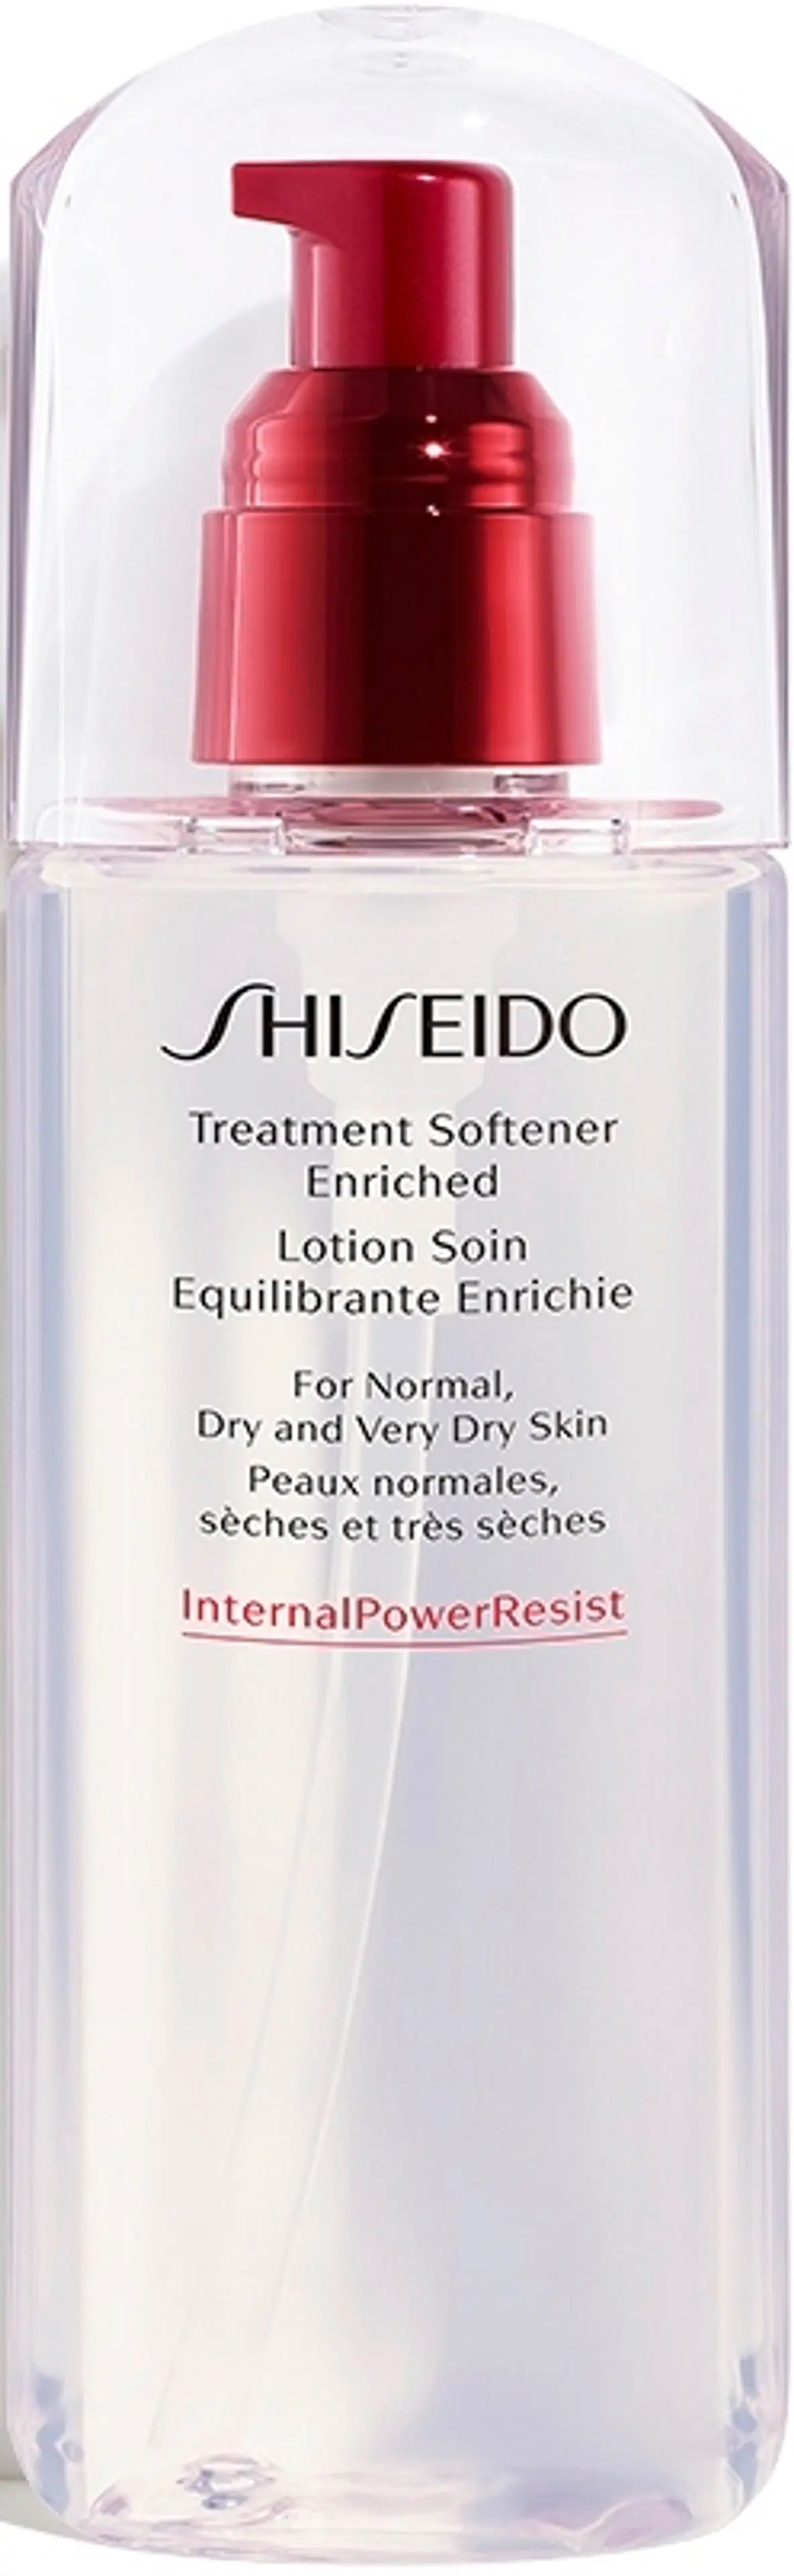 Shiseido Treatment Softener Enriched hoitovesi 150 ml